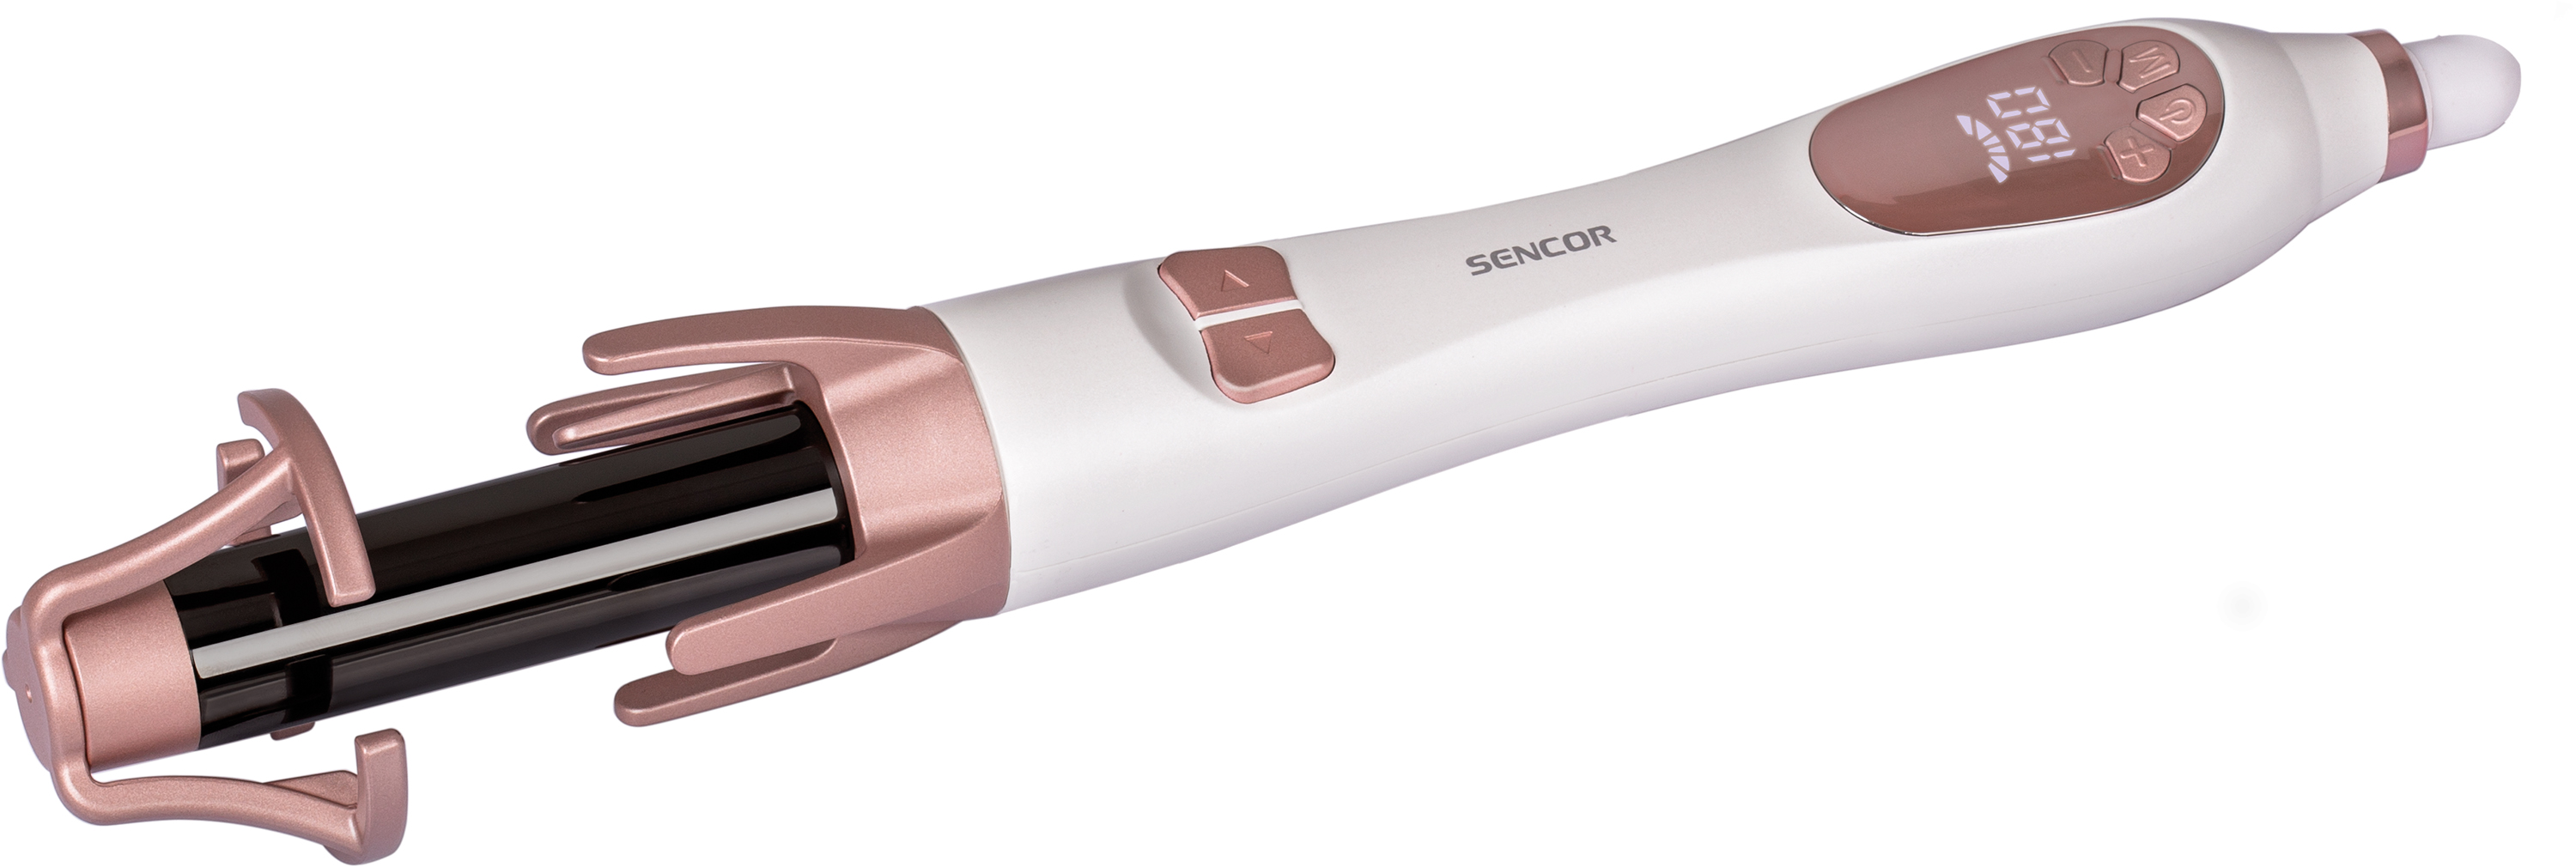 Электрощипцы Sencor SHS 0900GD белые, розовые электрощипцы philips moistureprotect bhb878 00 бежевые белые